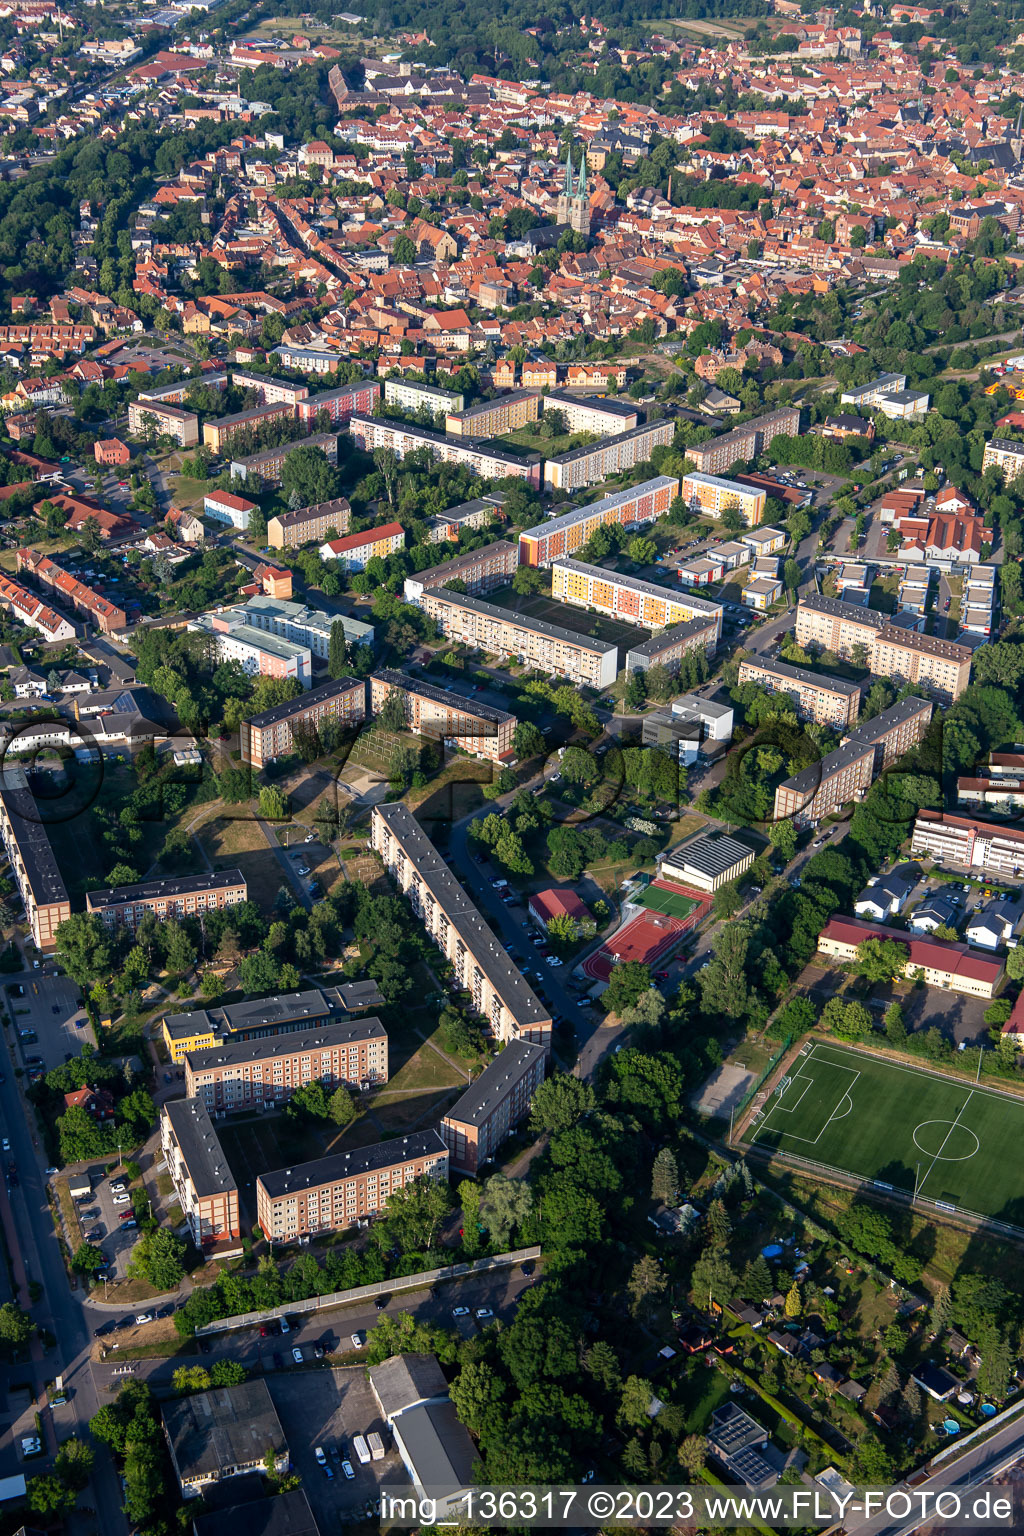 Apartment blocks Birkenstr in Quedlinburg in the state Saxony-Anhalt, Germany